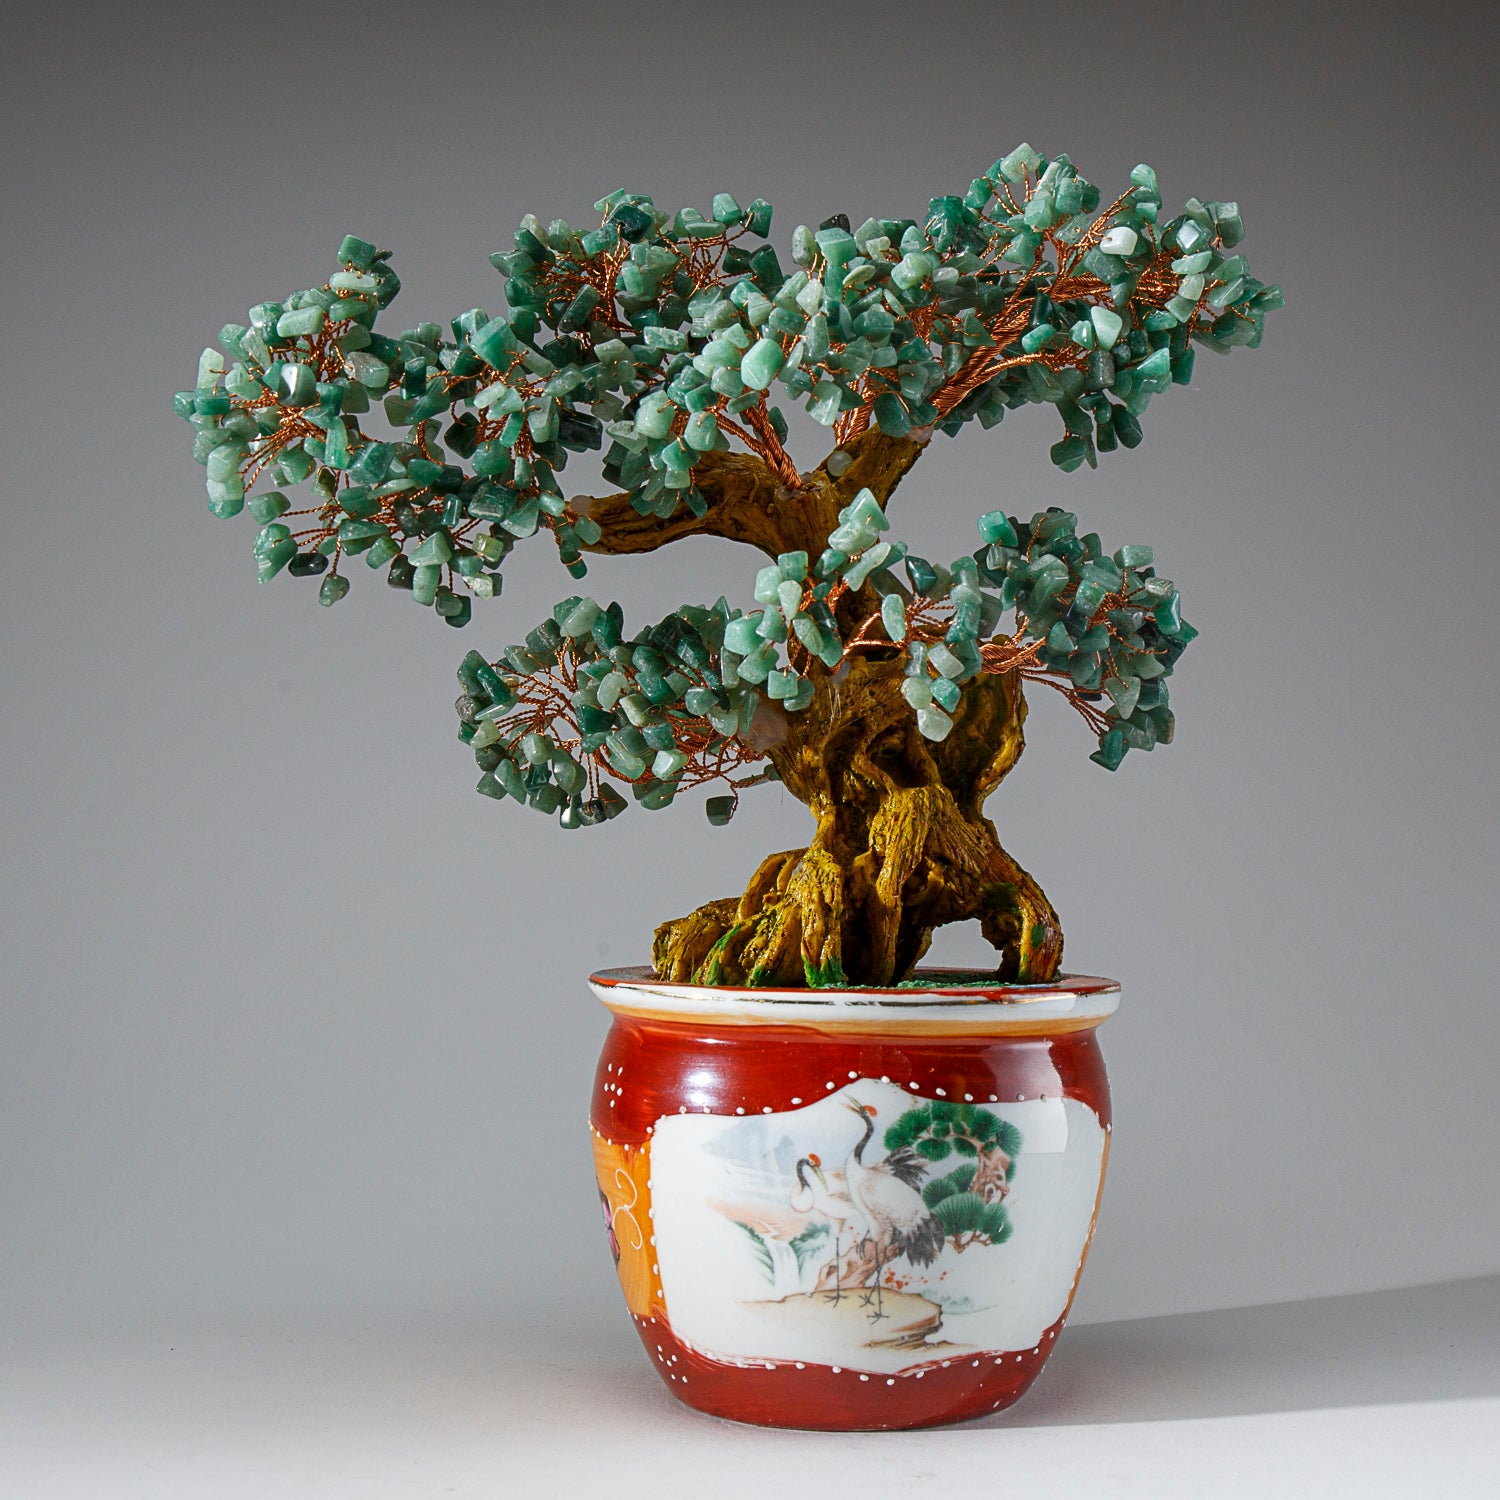 Genuine Green Aventurine Gemstone Bonsai Tree in Round Ceramic Pot (11” Tall)